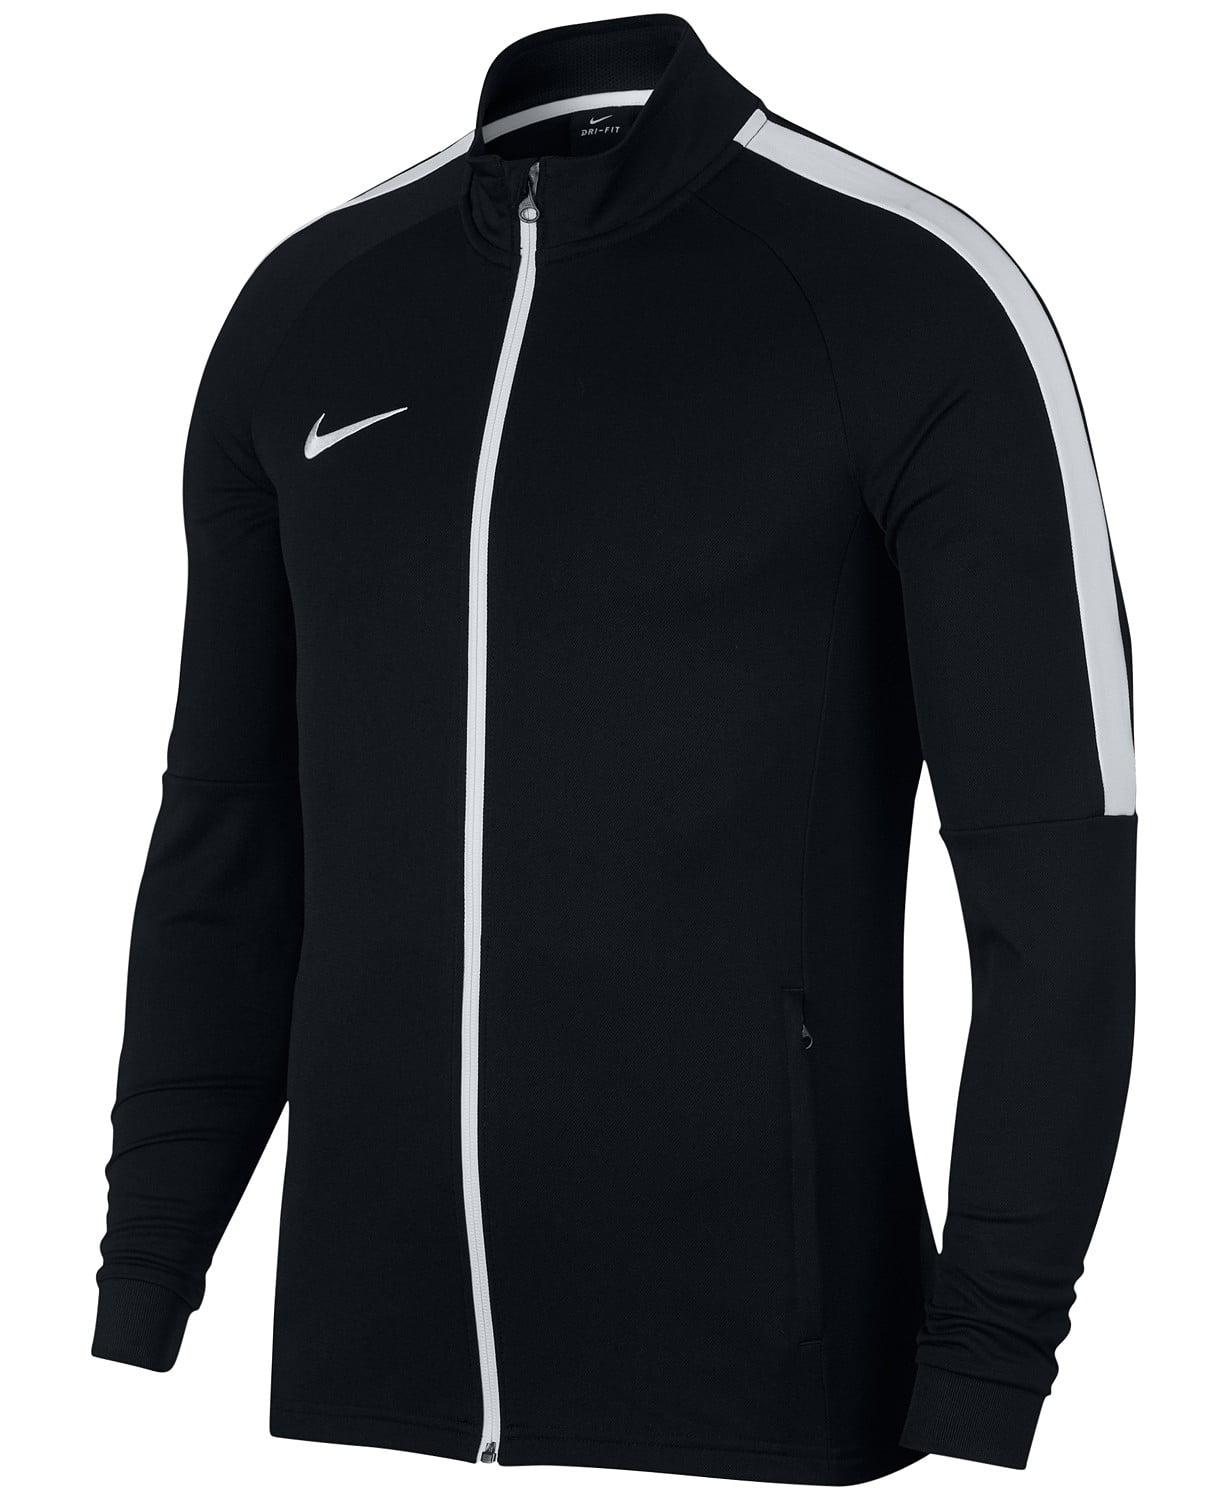 Nike - Mens Jacket Black White Logo Print Full-Zip Mock-Neck $55 XL ...